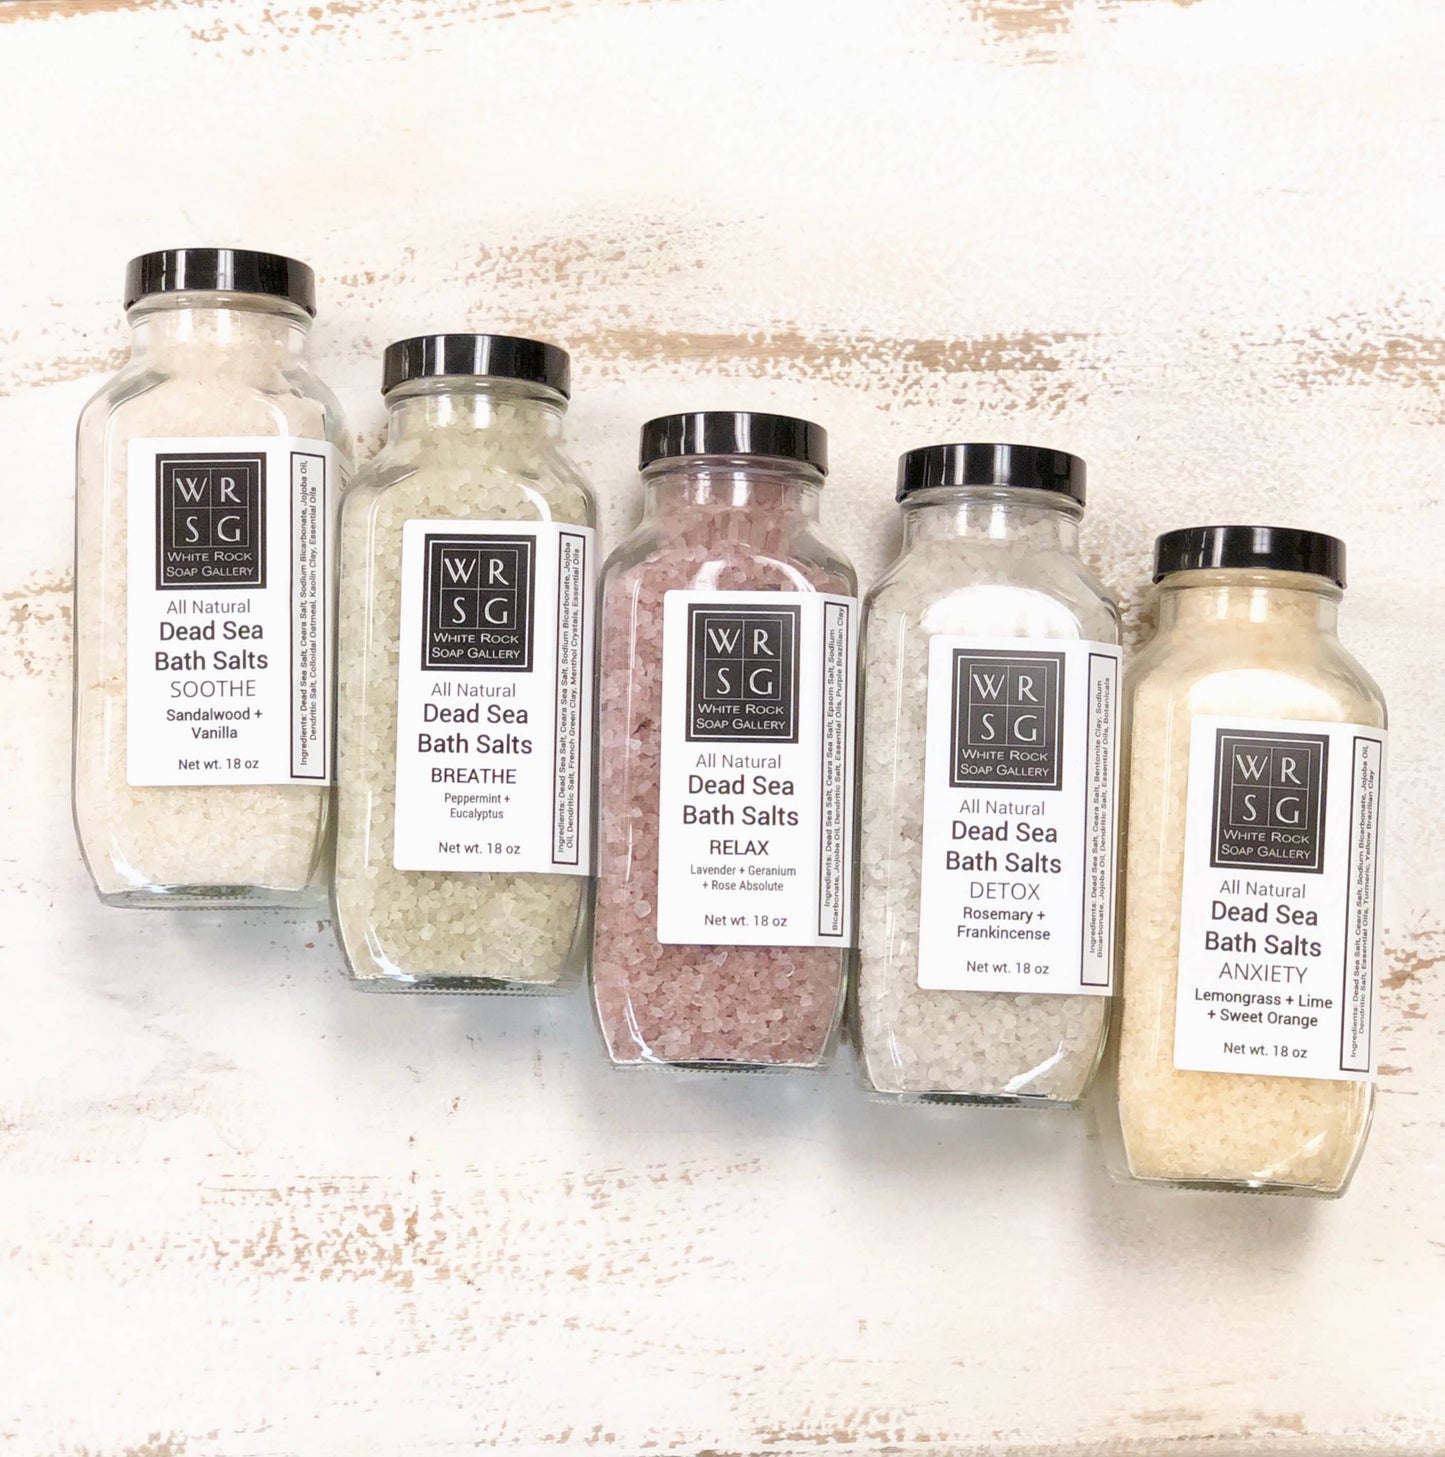 White Rock Soap Gallery - Dead Sea Bath Salts Square Jar: RELAX-Lavender + Rose Absolute + Geranium